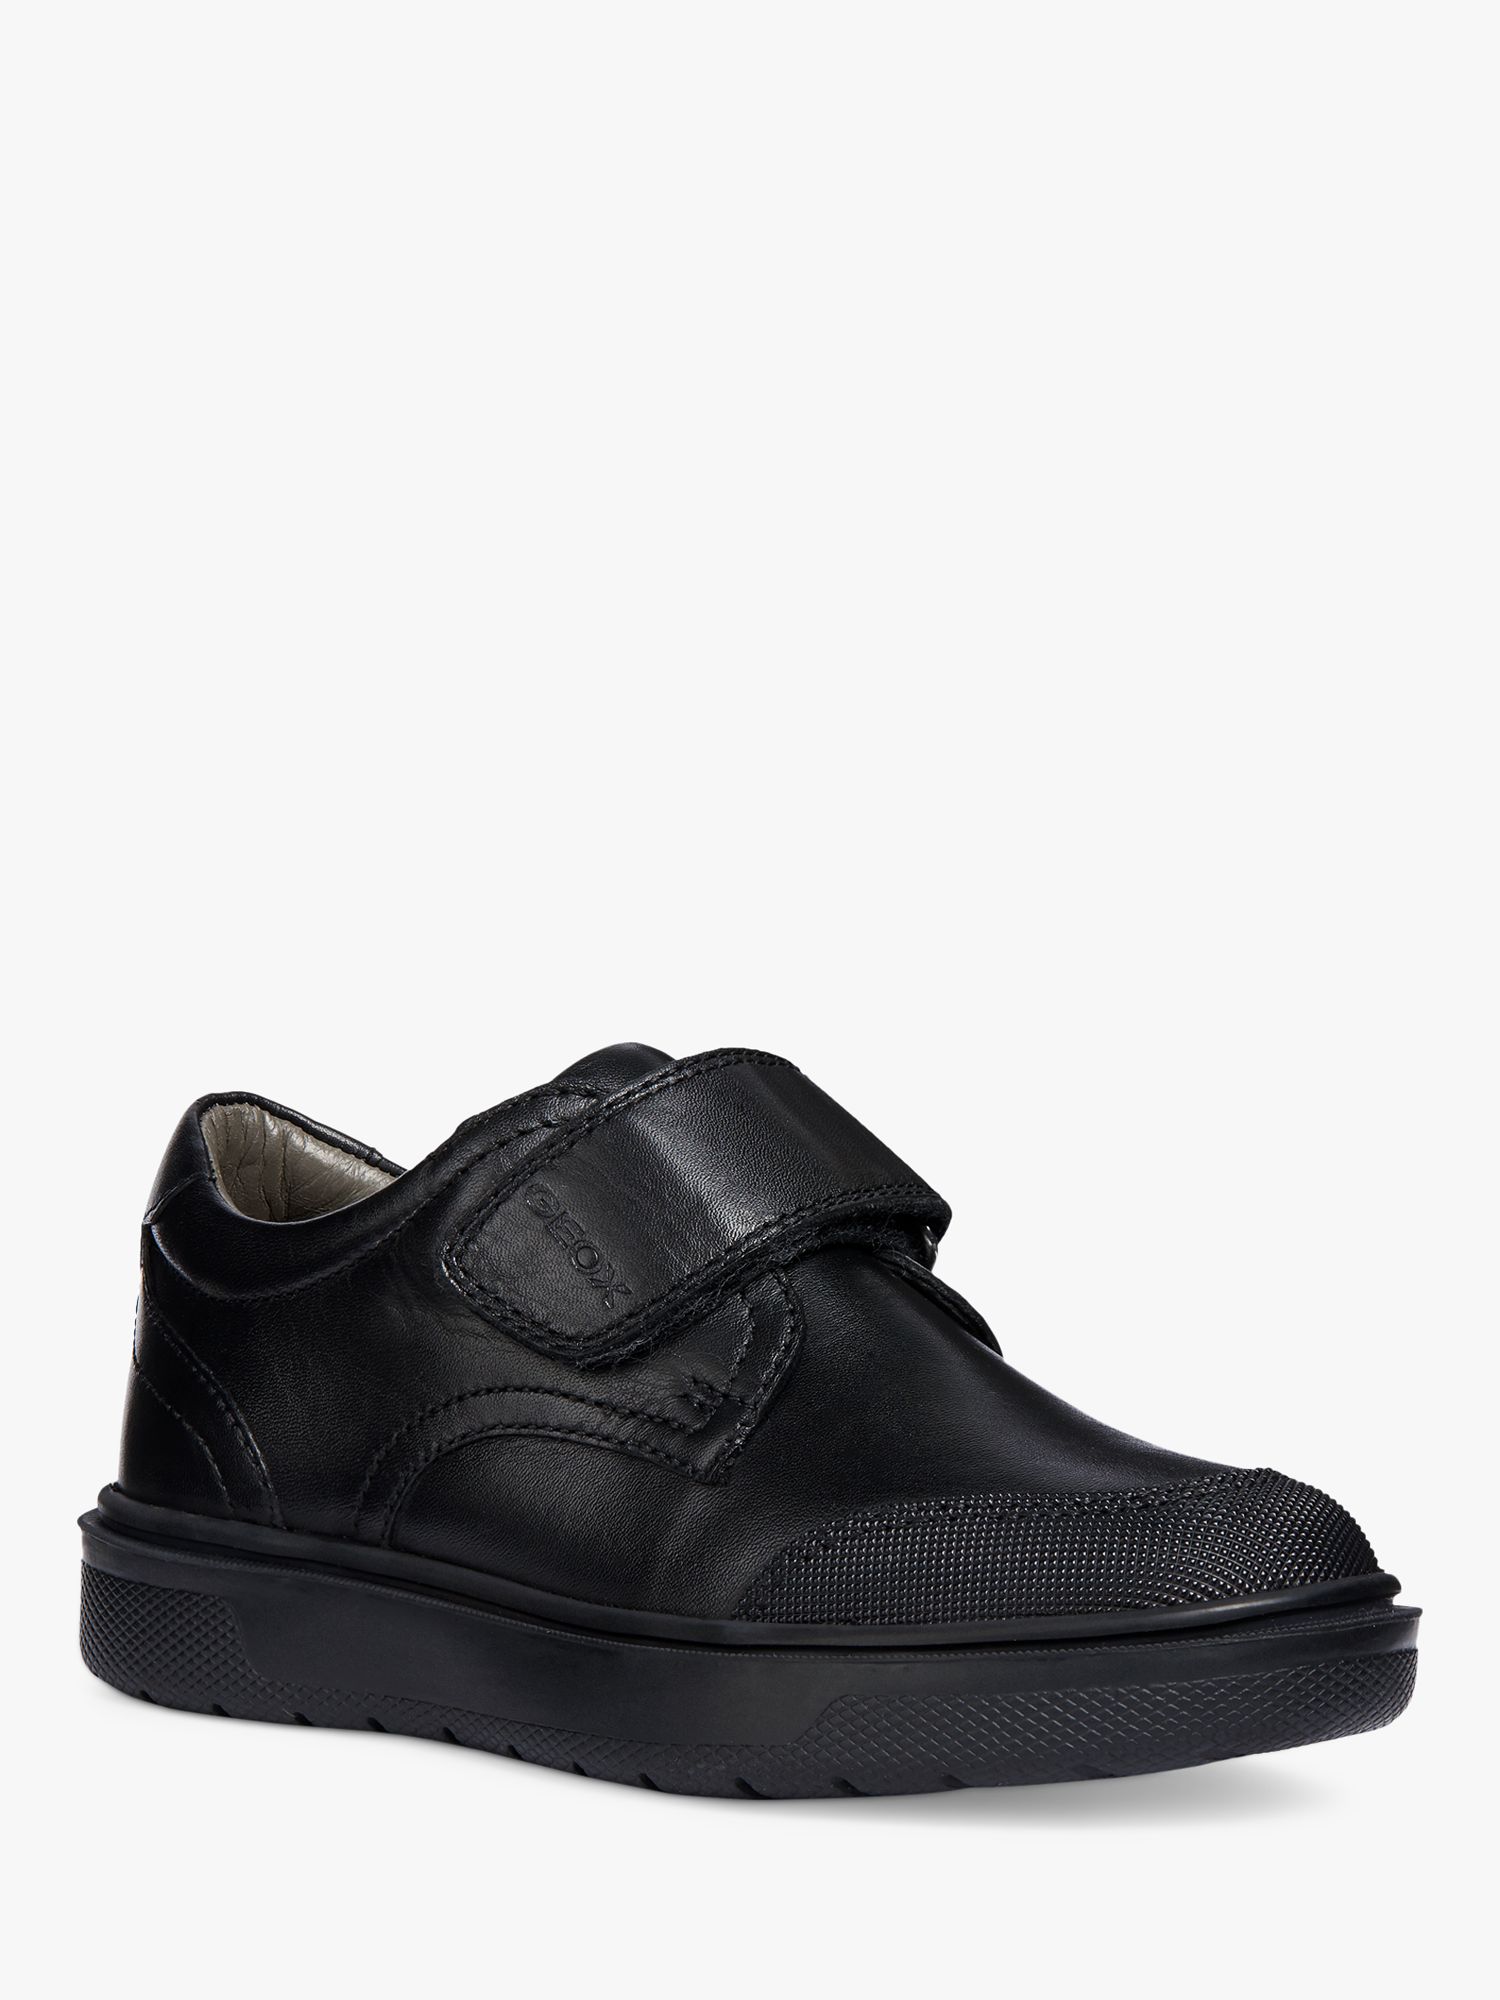 Geox Kids' Riddock Riptape School Shoes, Black, 27